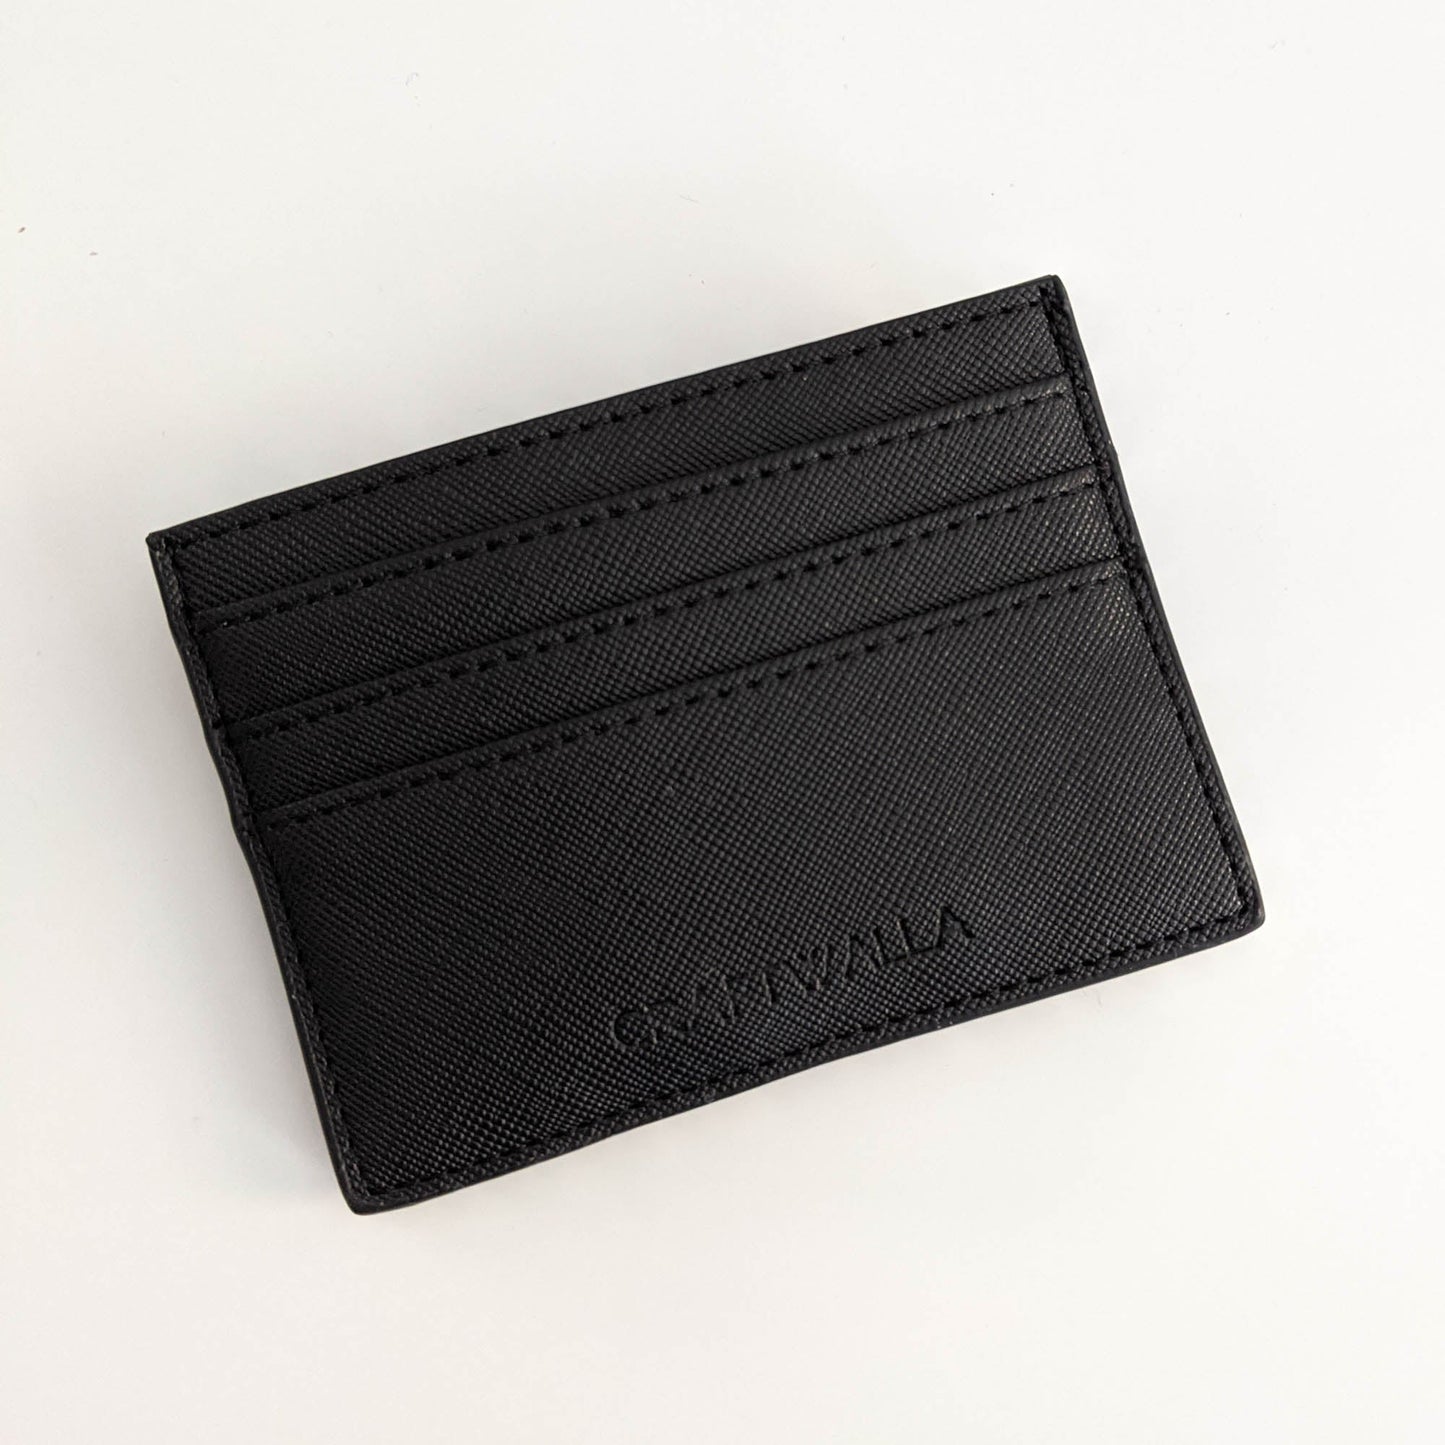 Black Leather Card Holder - Saffiano Effect